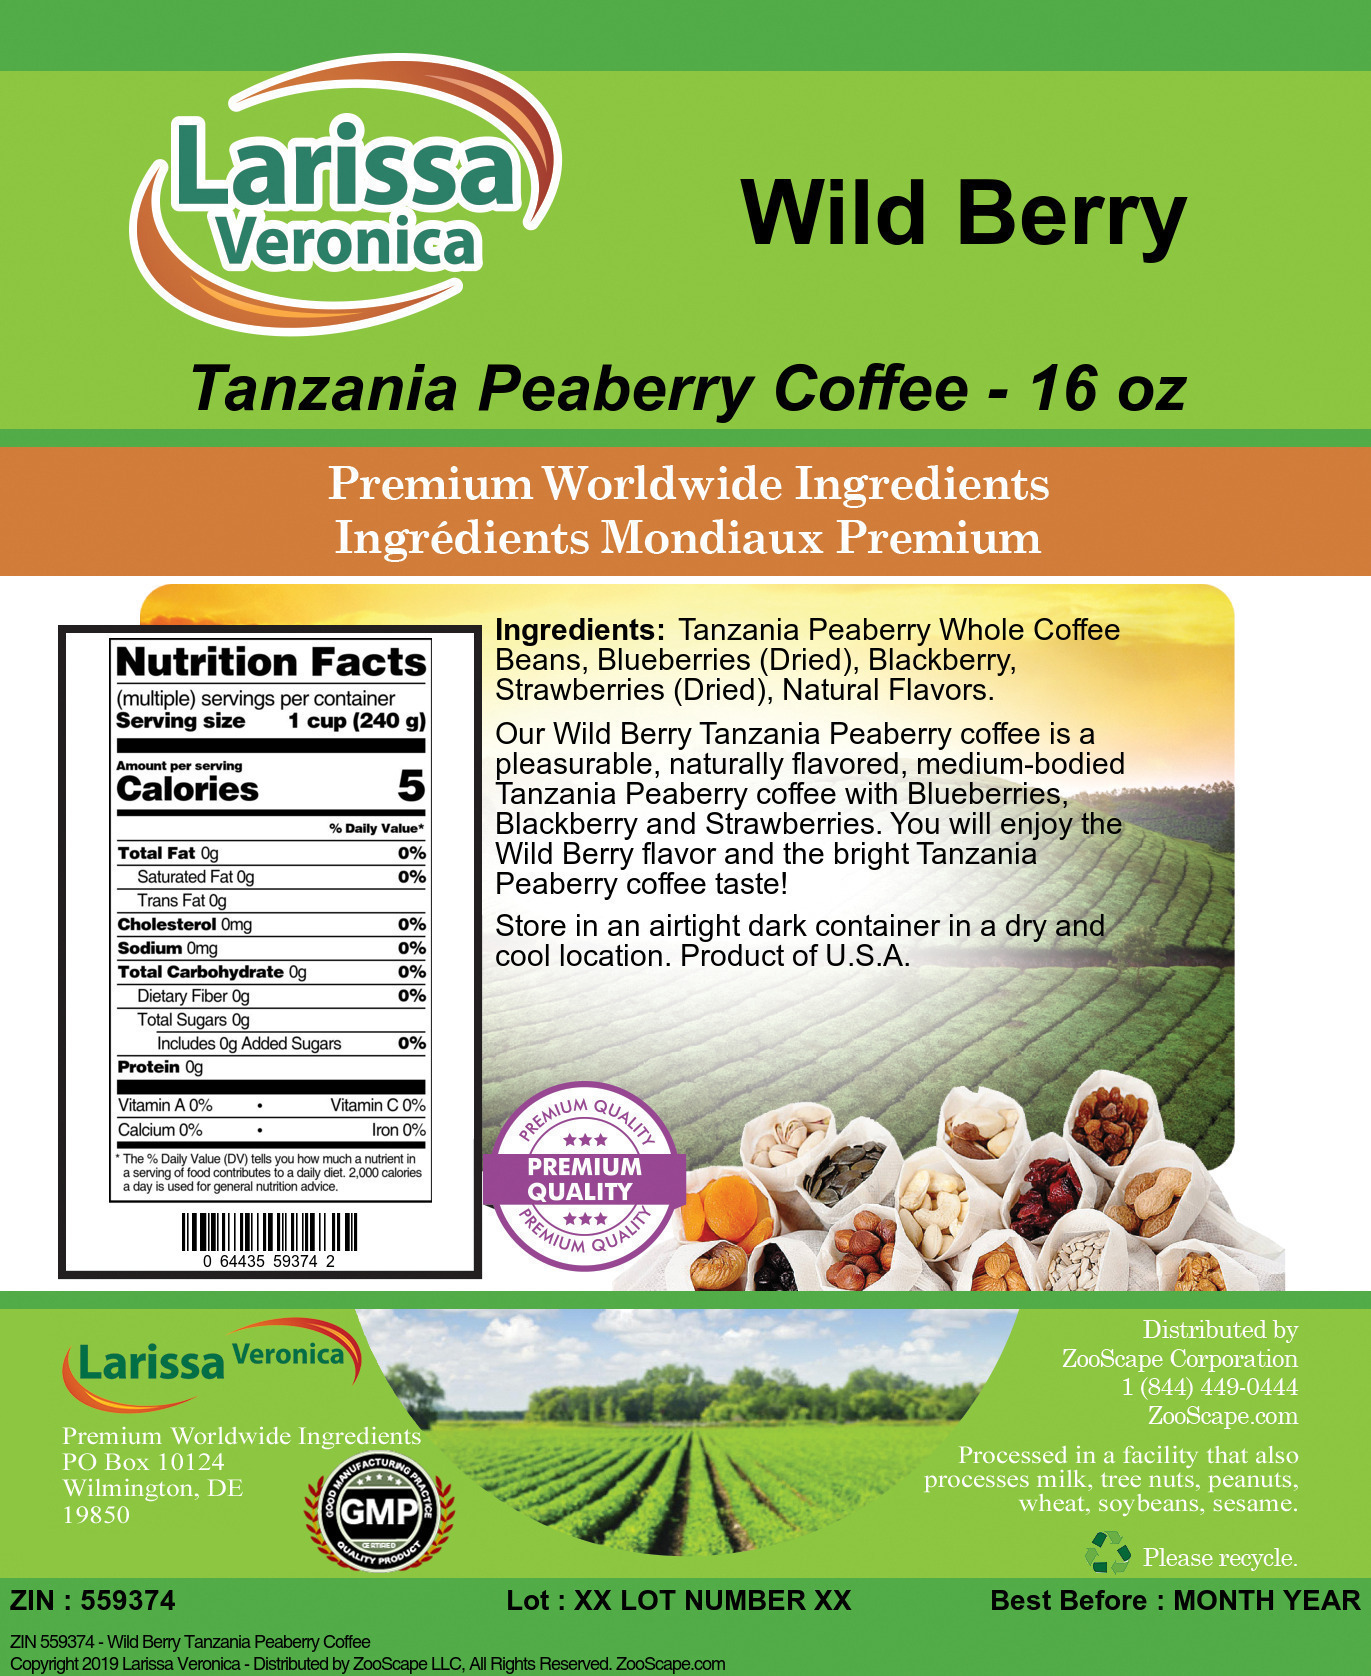 Wild Berry Tanzania Peaberry Coffee - Label